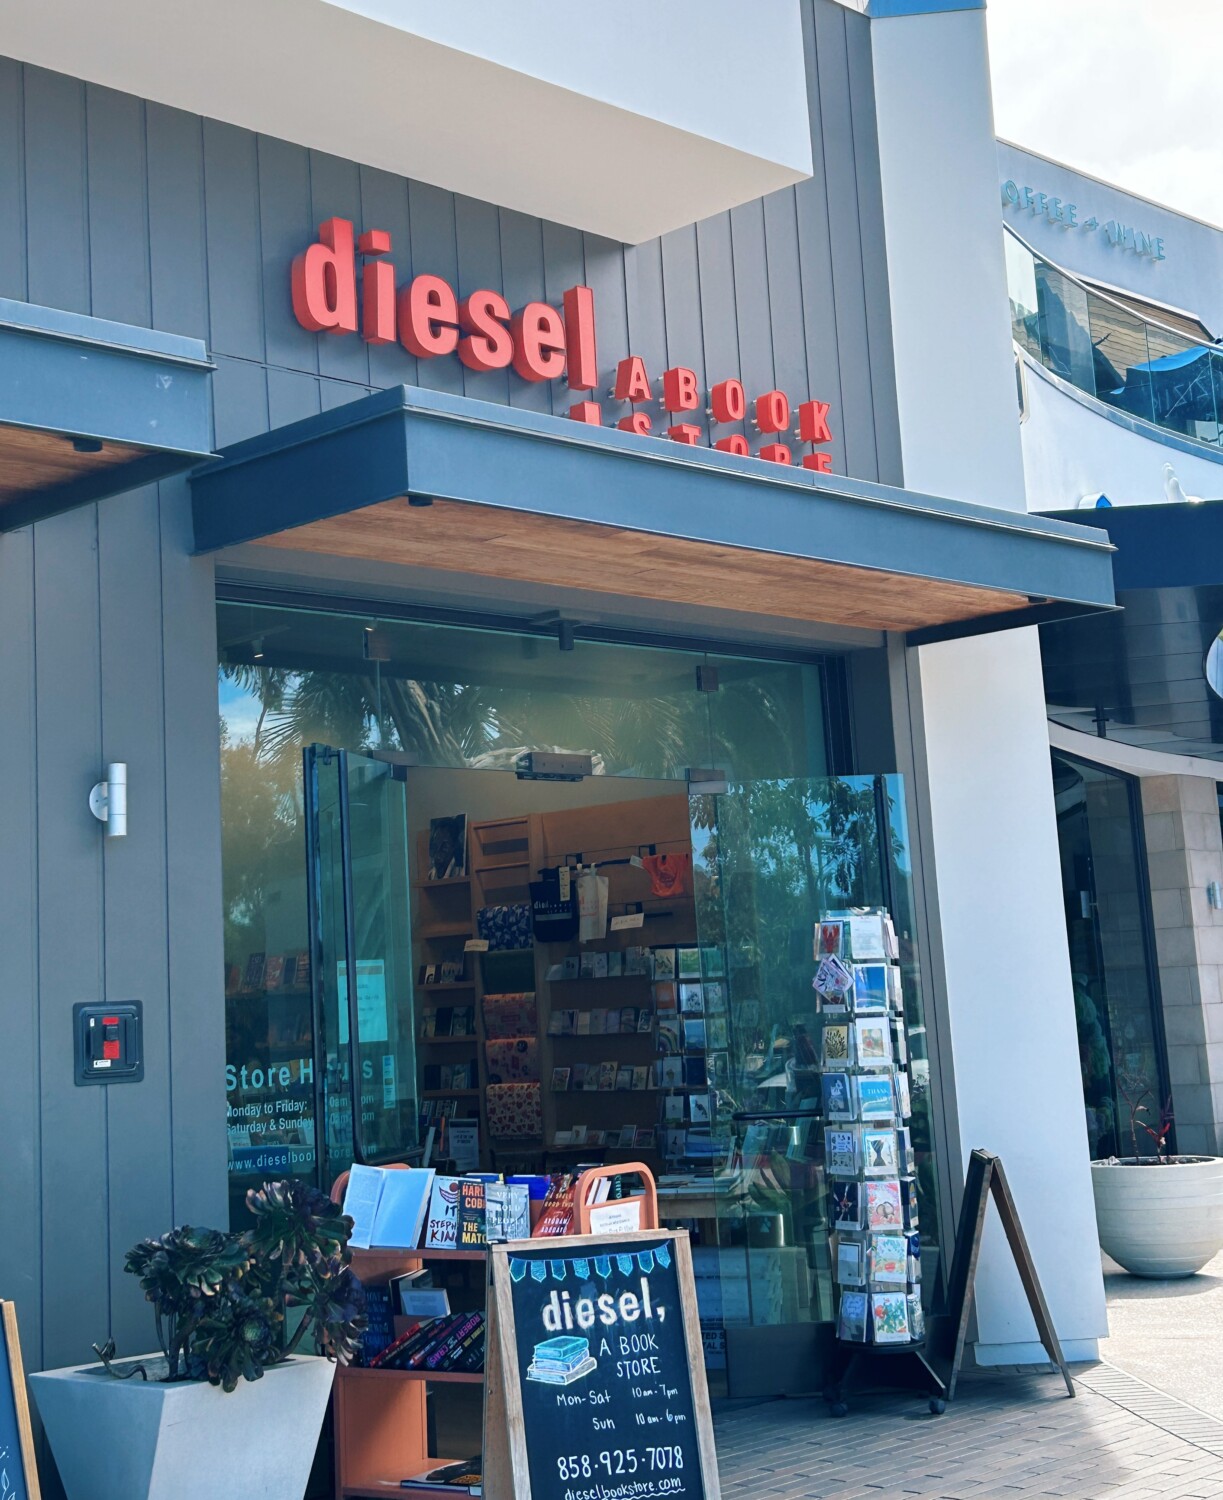 Diesel - Del Mar | Best Bookstores in San Diego